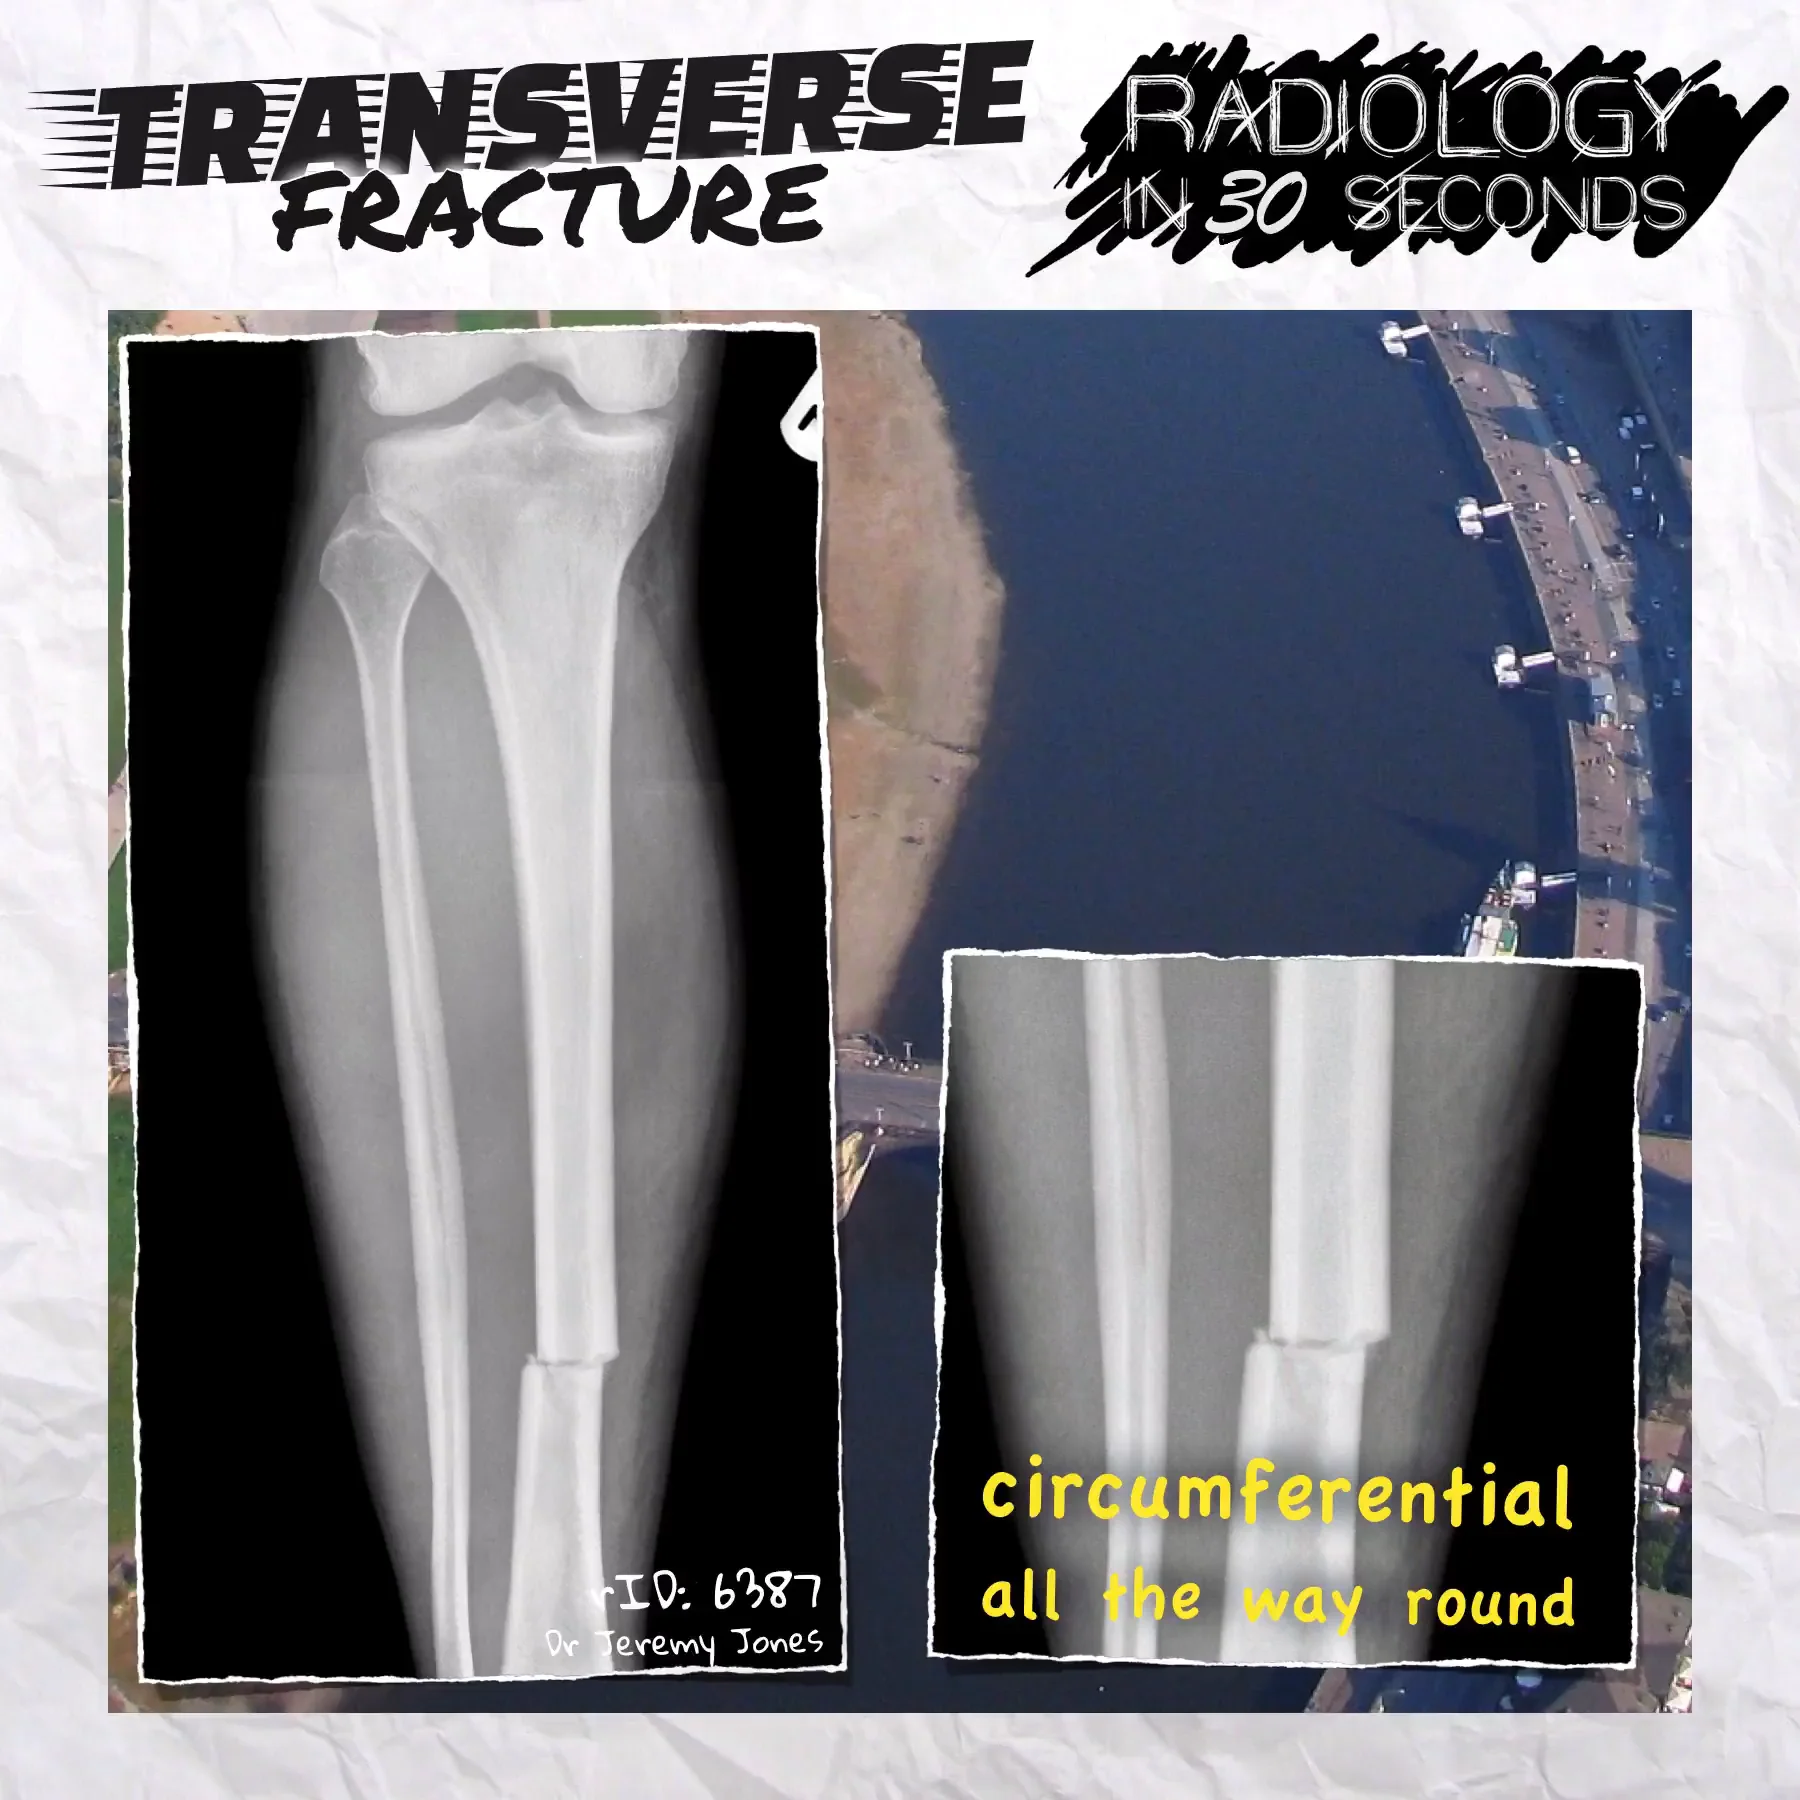 transverse fractures